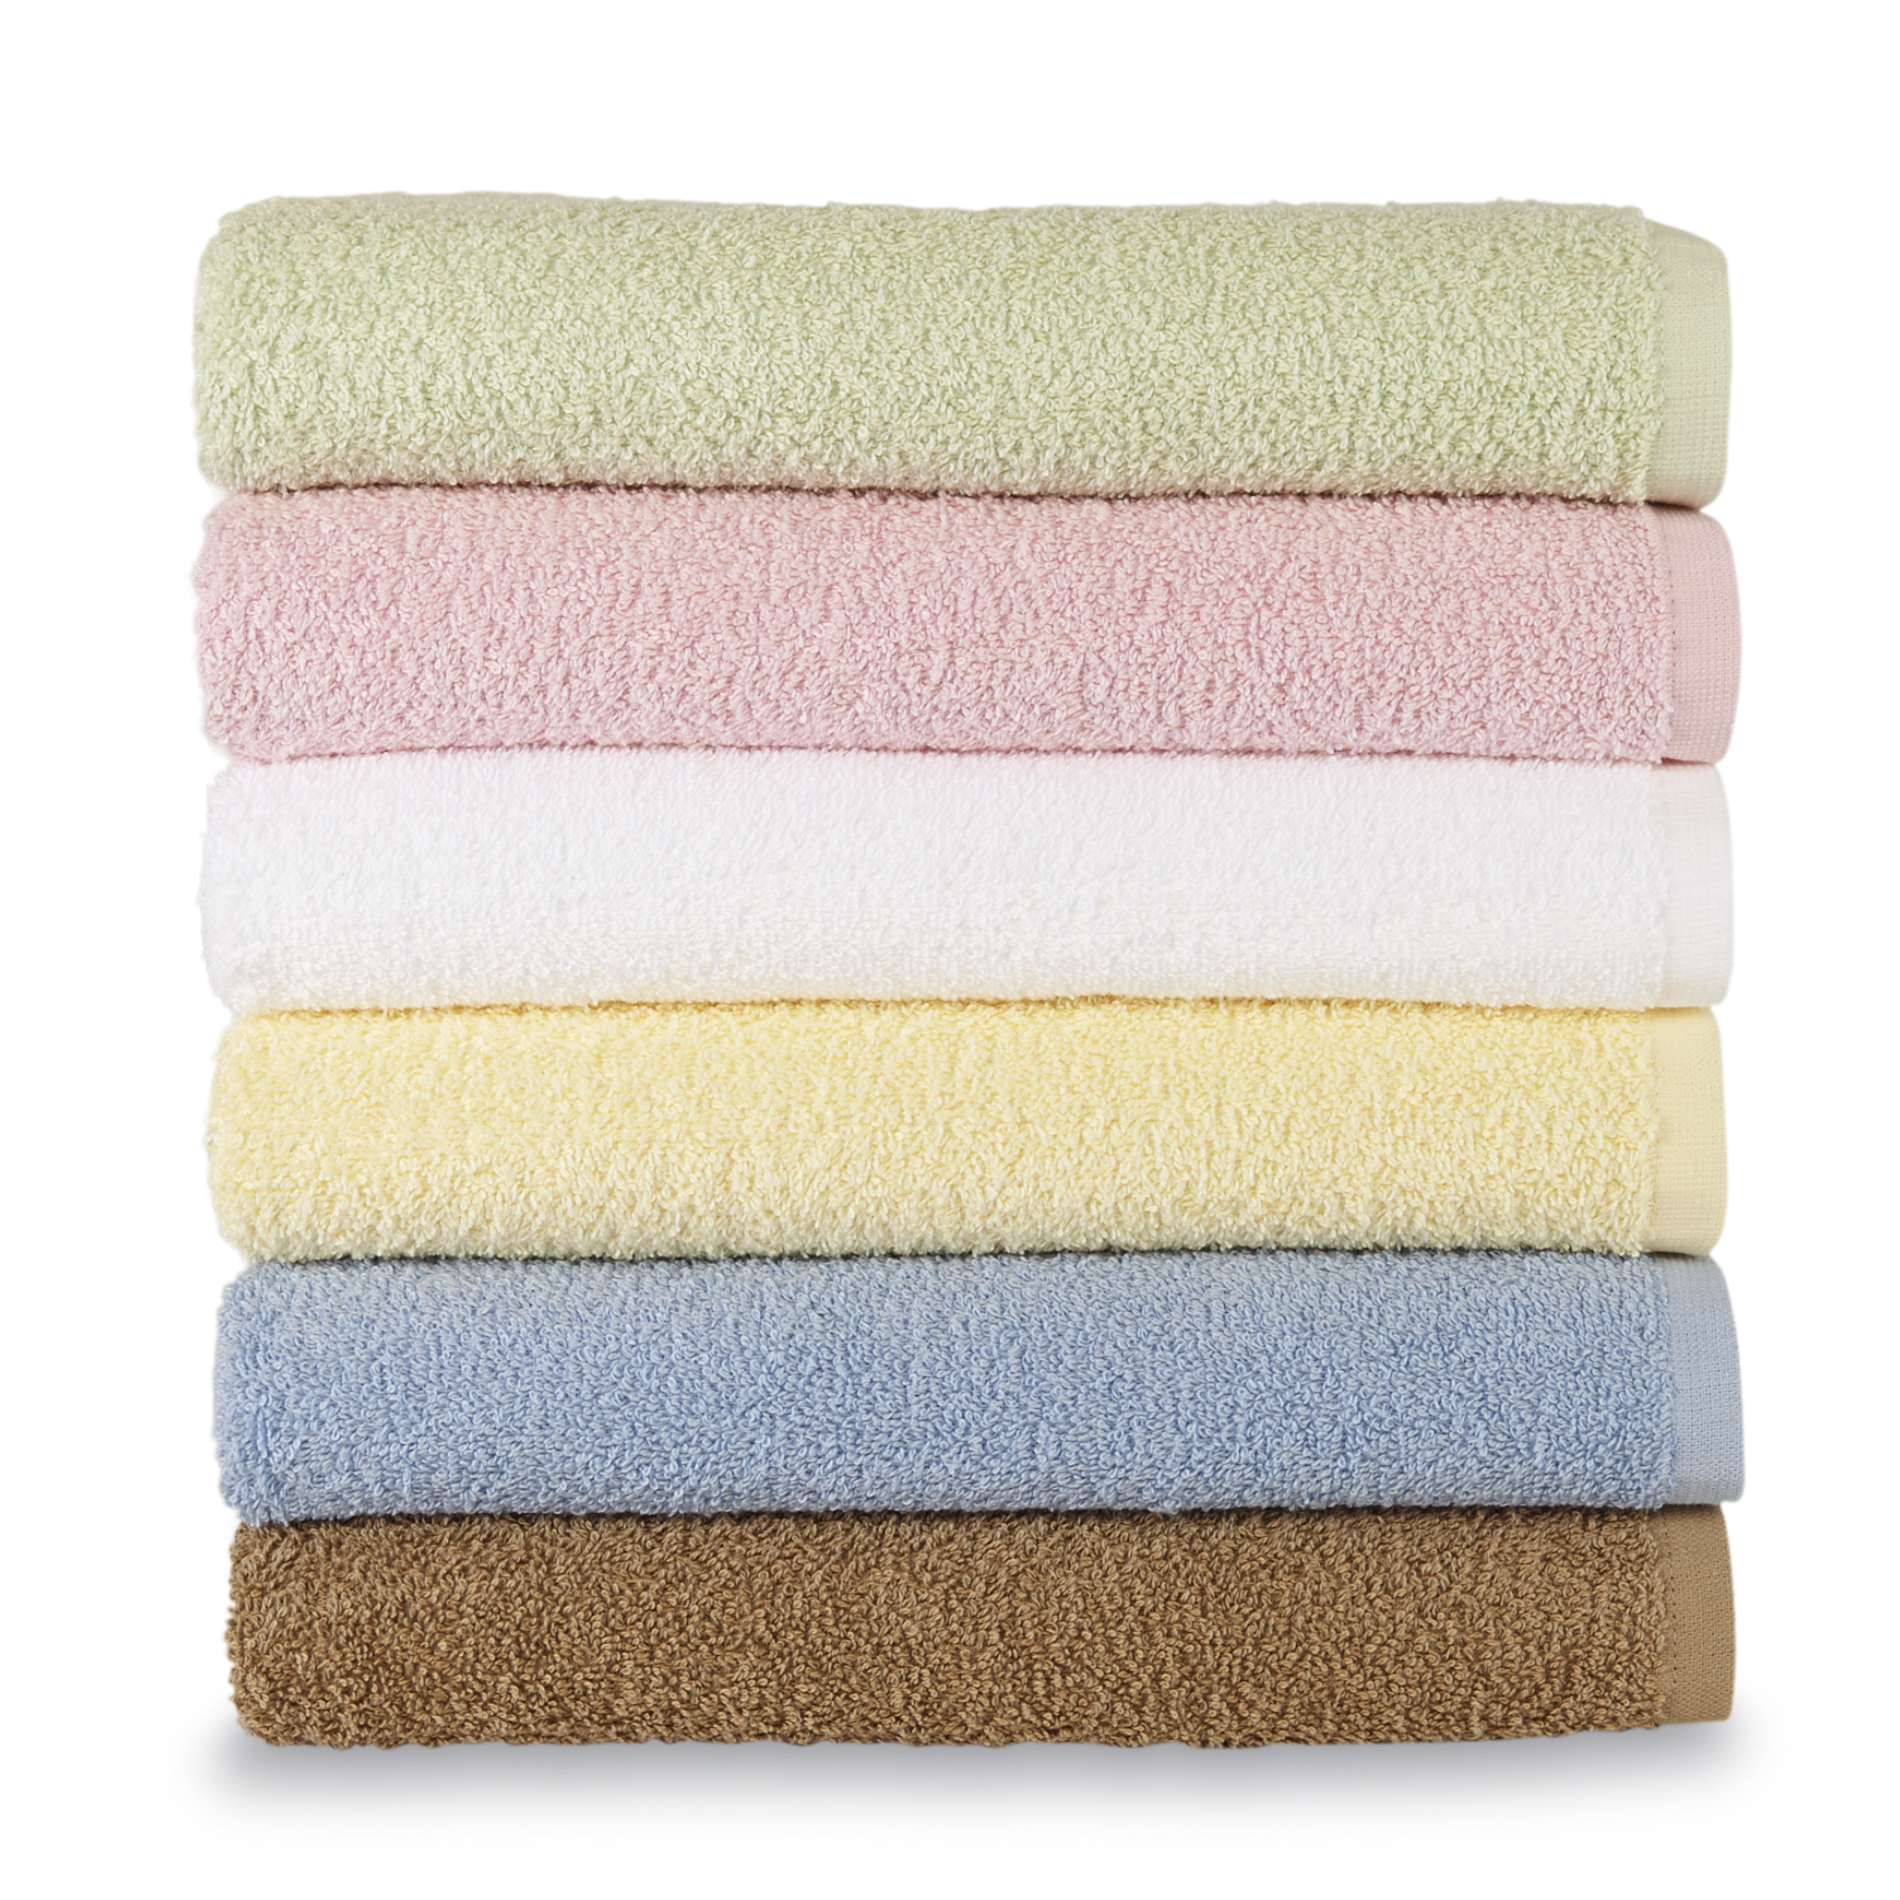 Colormate Basics Bath Towel  Hand Towel  or Washcloth